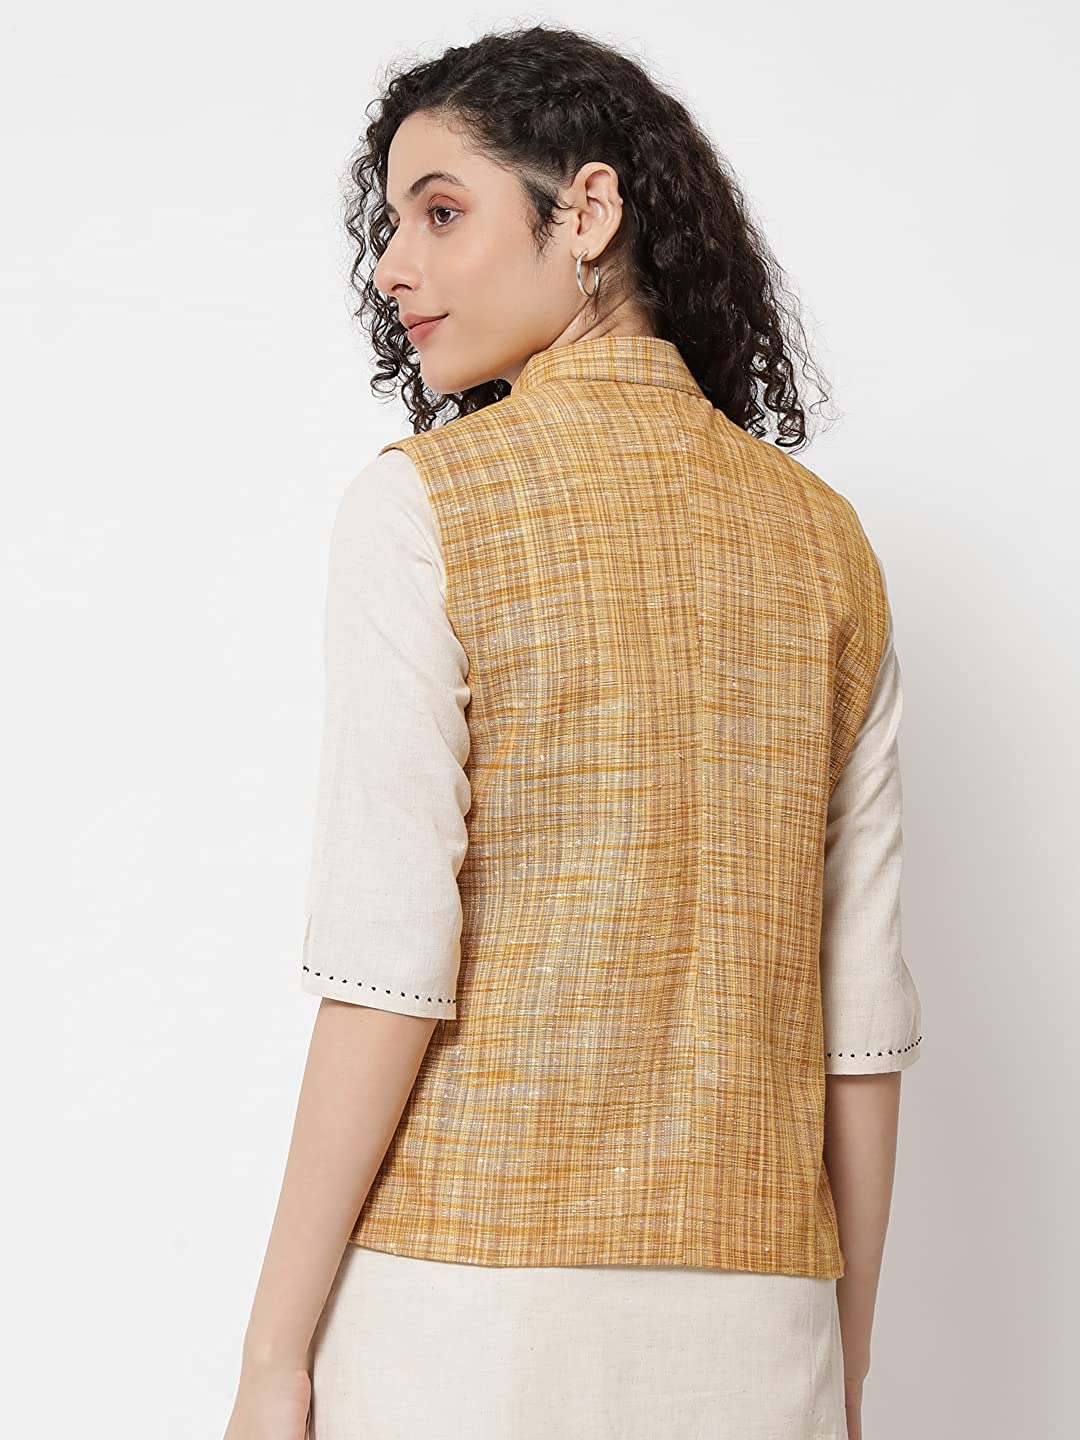 Vastraa Fusion Ladies Khadi Cotton-Small Check Patterns Modi Jacket Waistcoat